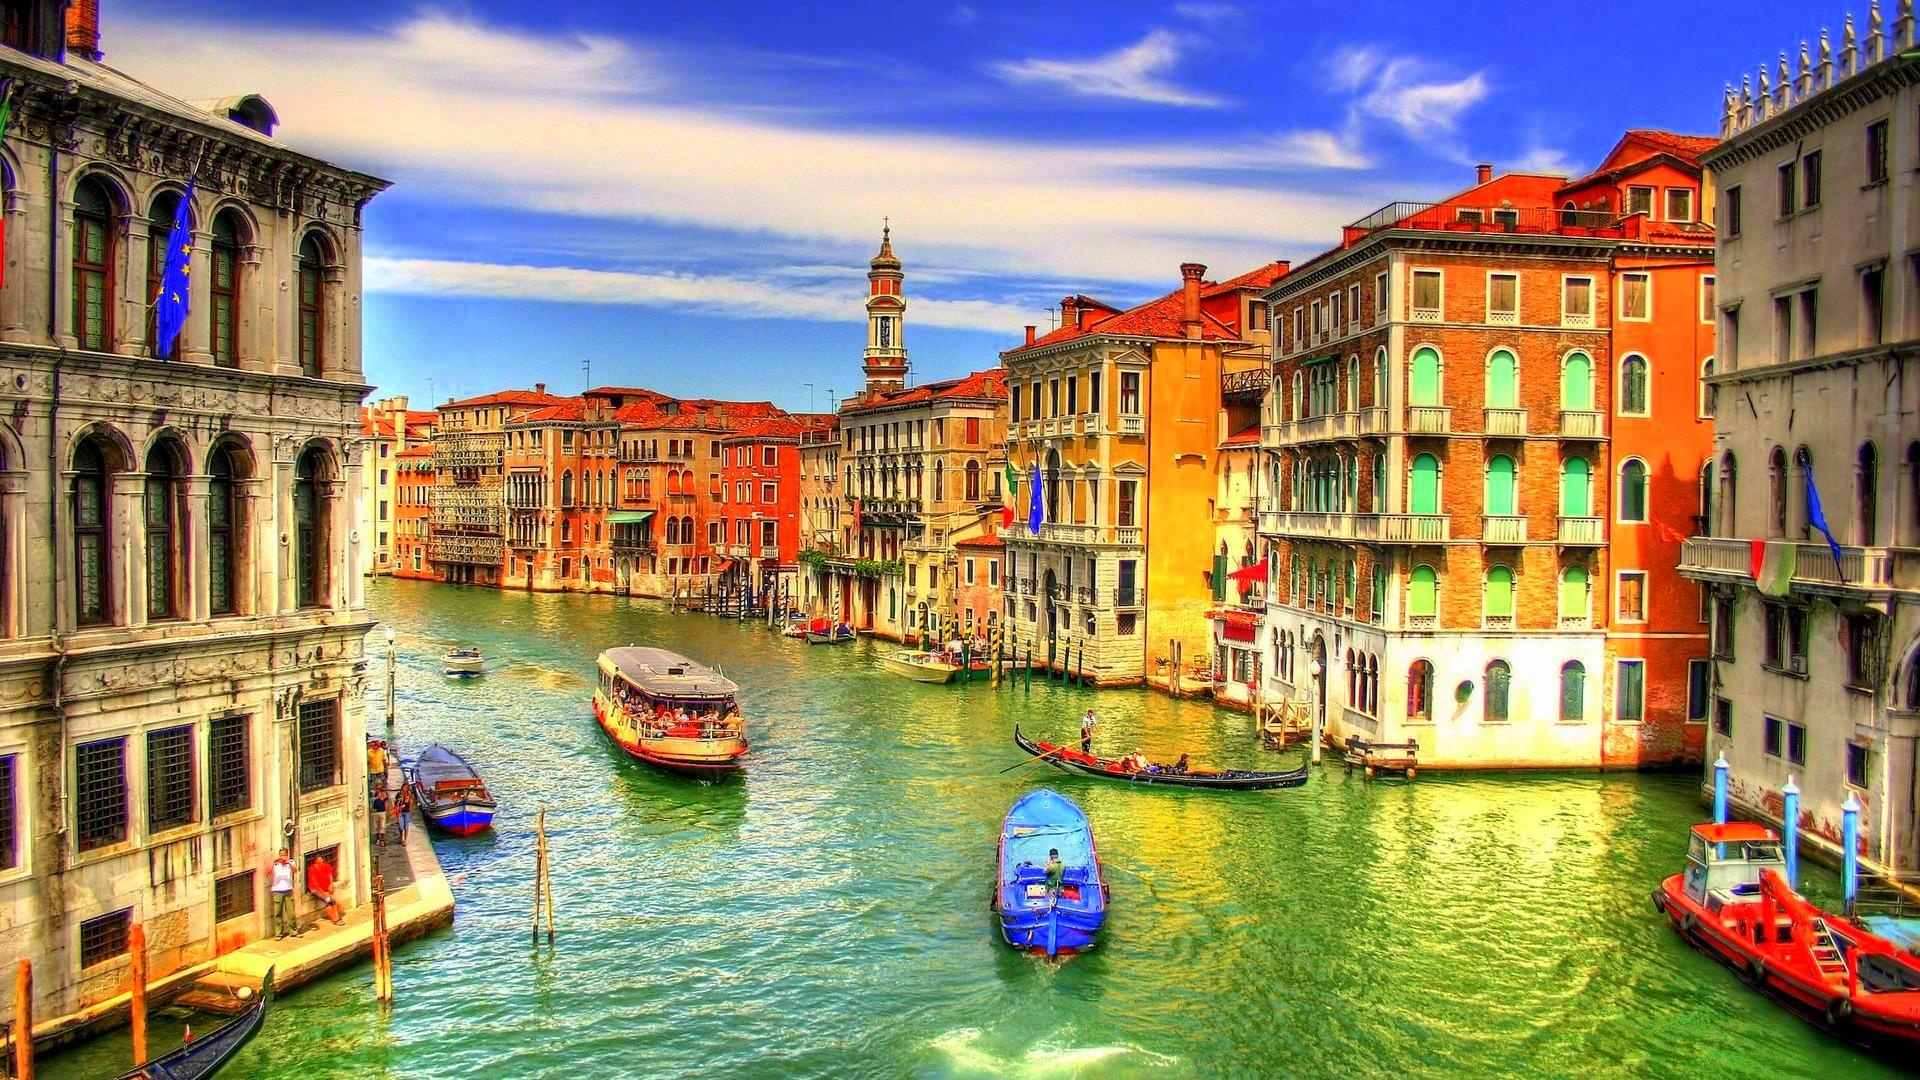 Water Taxi: Venice Grand Canal, Vaporettos, The Venetian public transport. 1920x1080 Full HD Background.